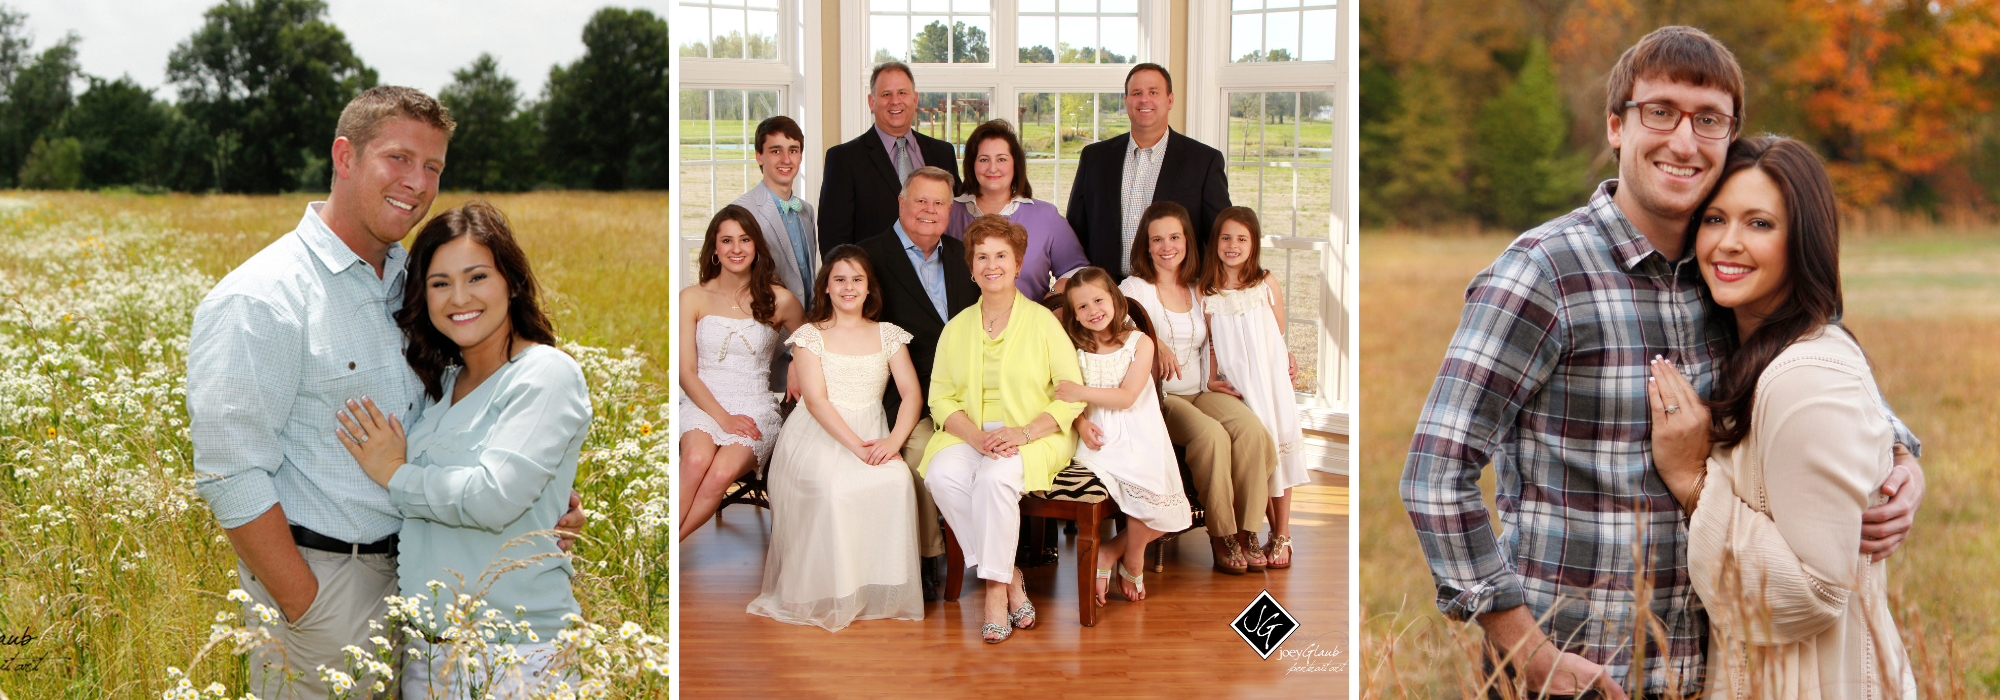 Photos collage of a wedding, children, and Senior photo shoot